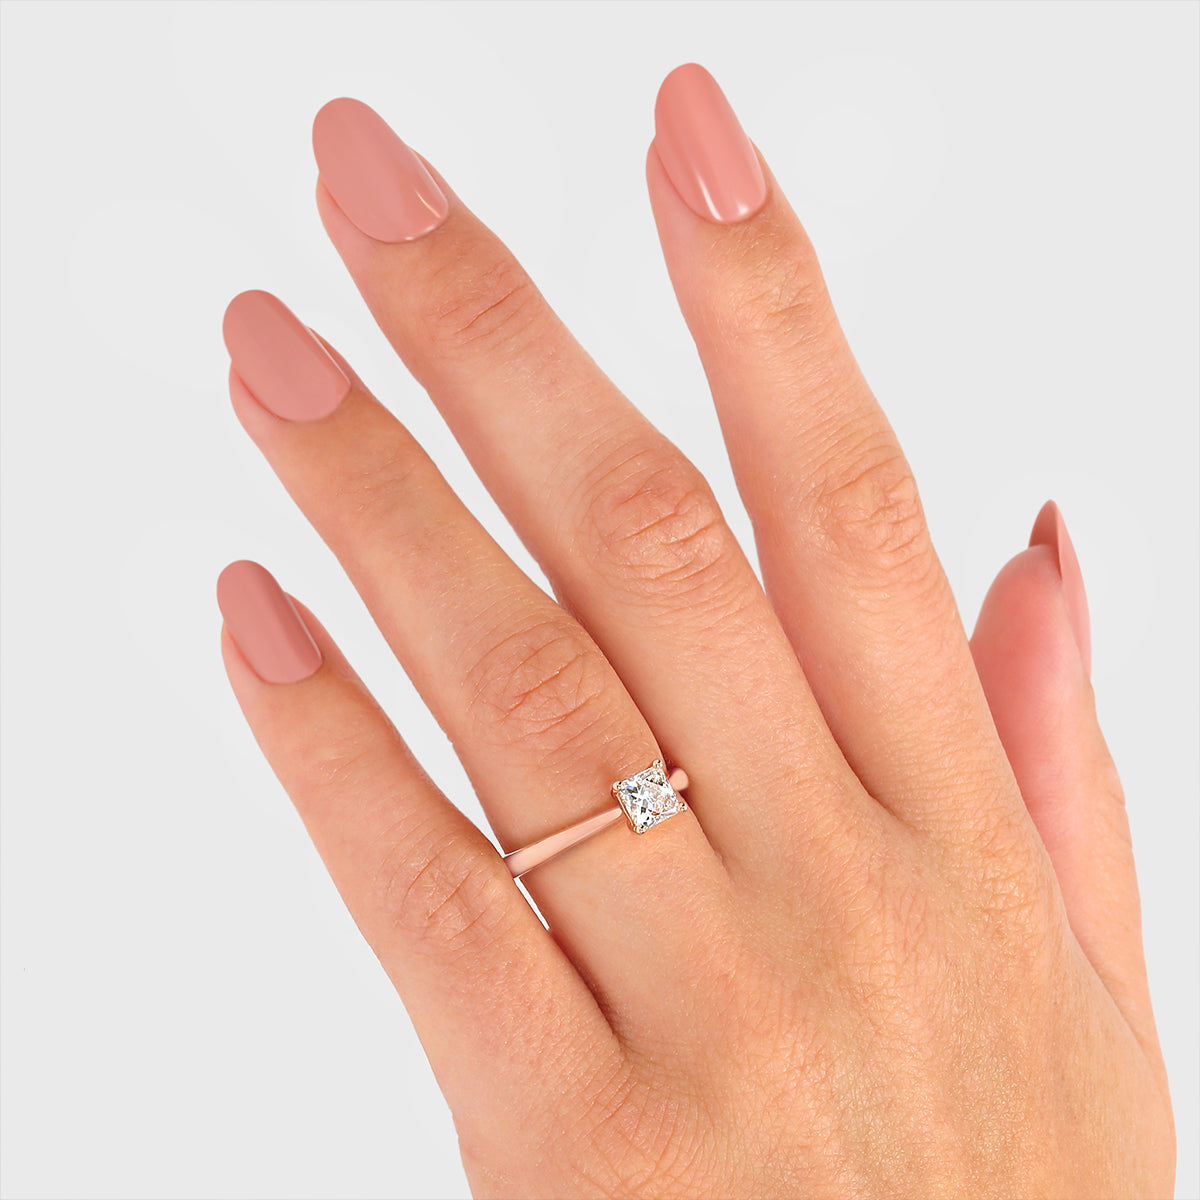 Hand wearing a Rose Gold Shimansky Diamond Engagement Ring